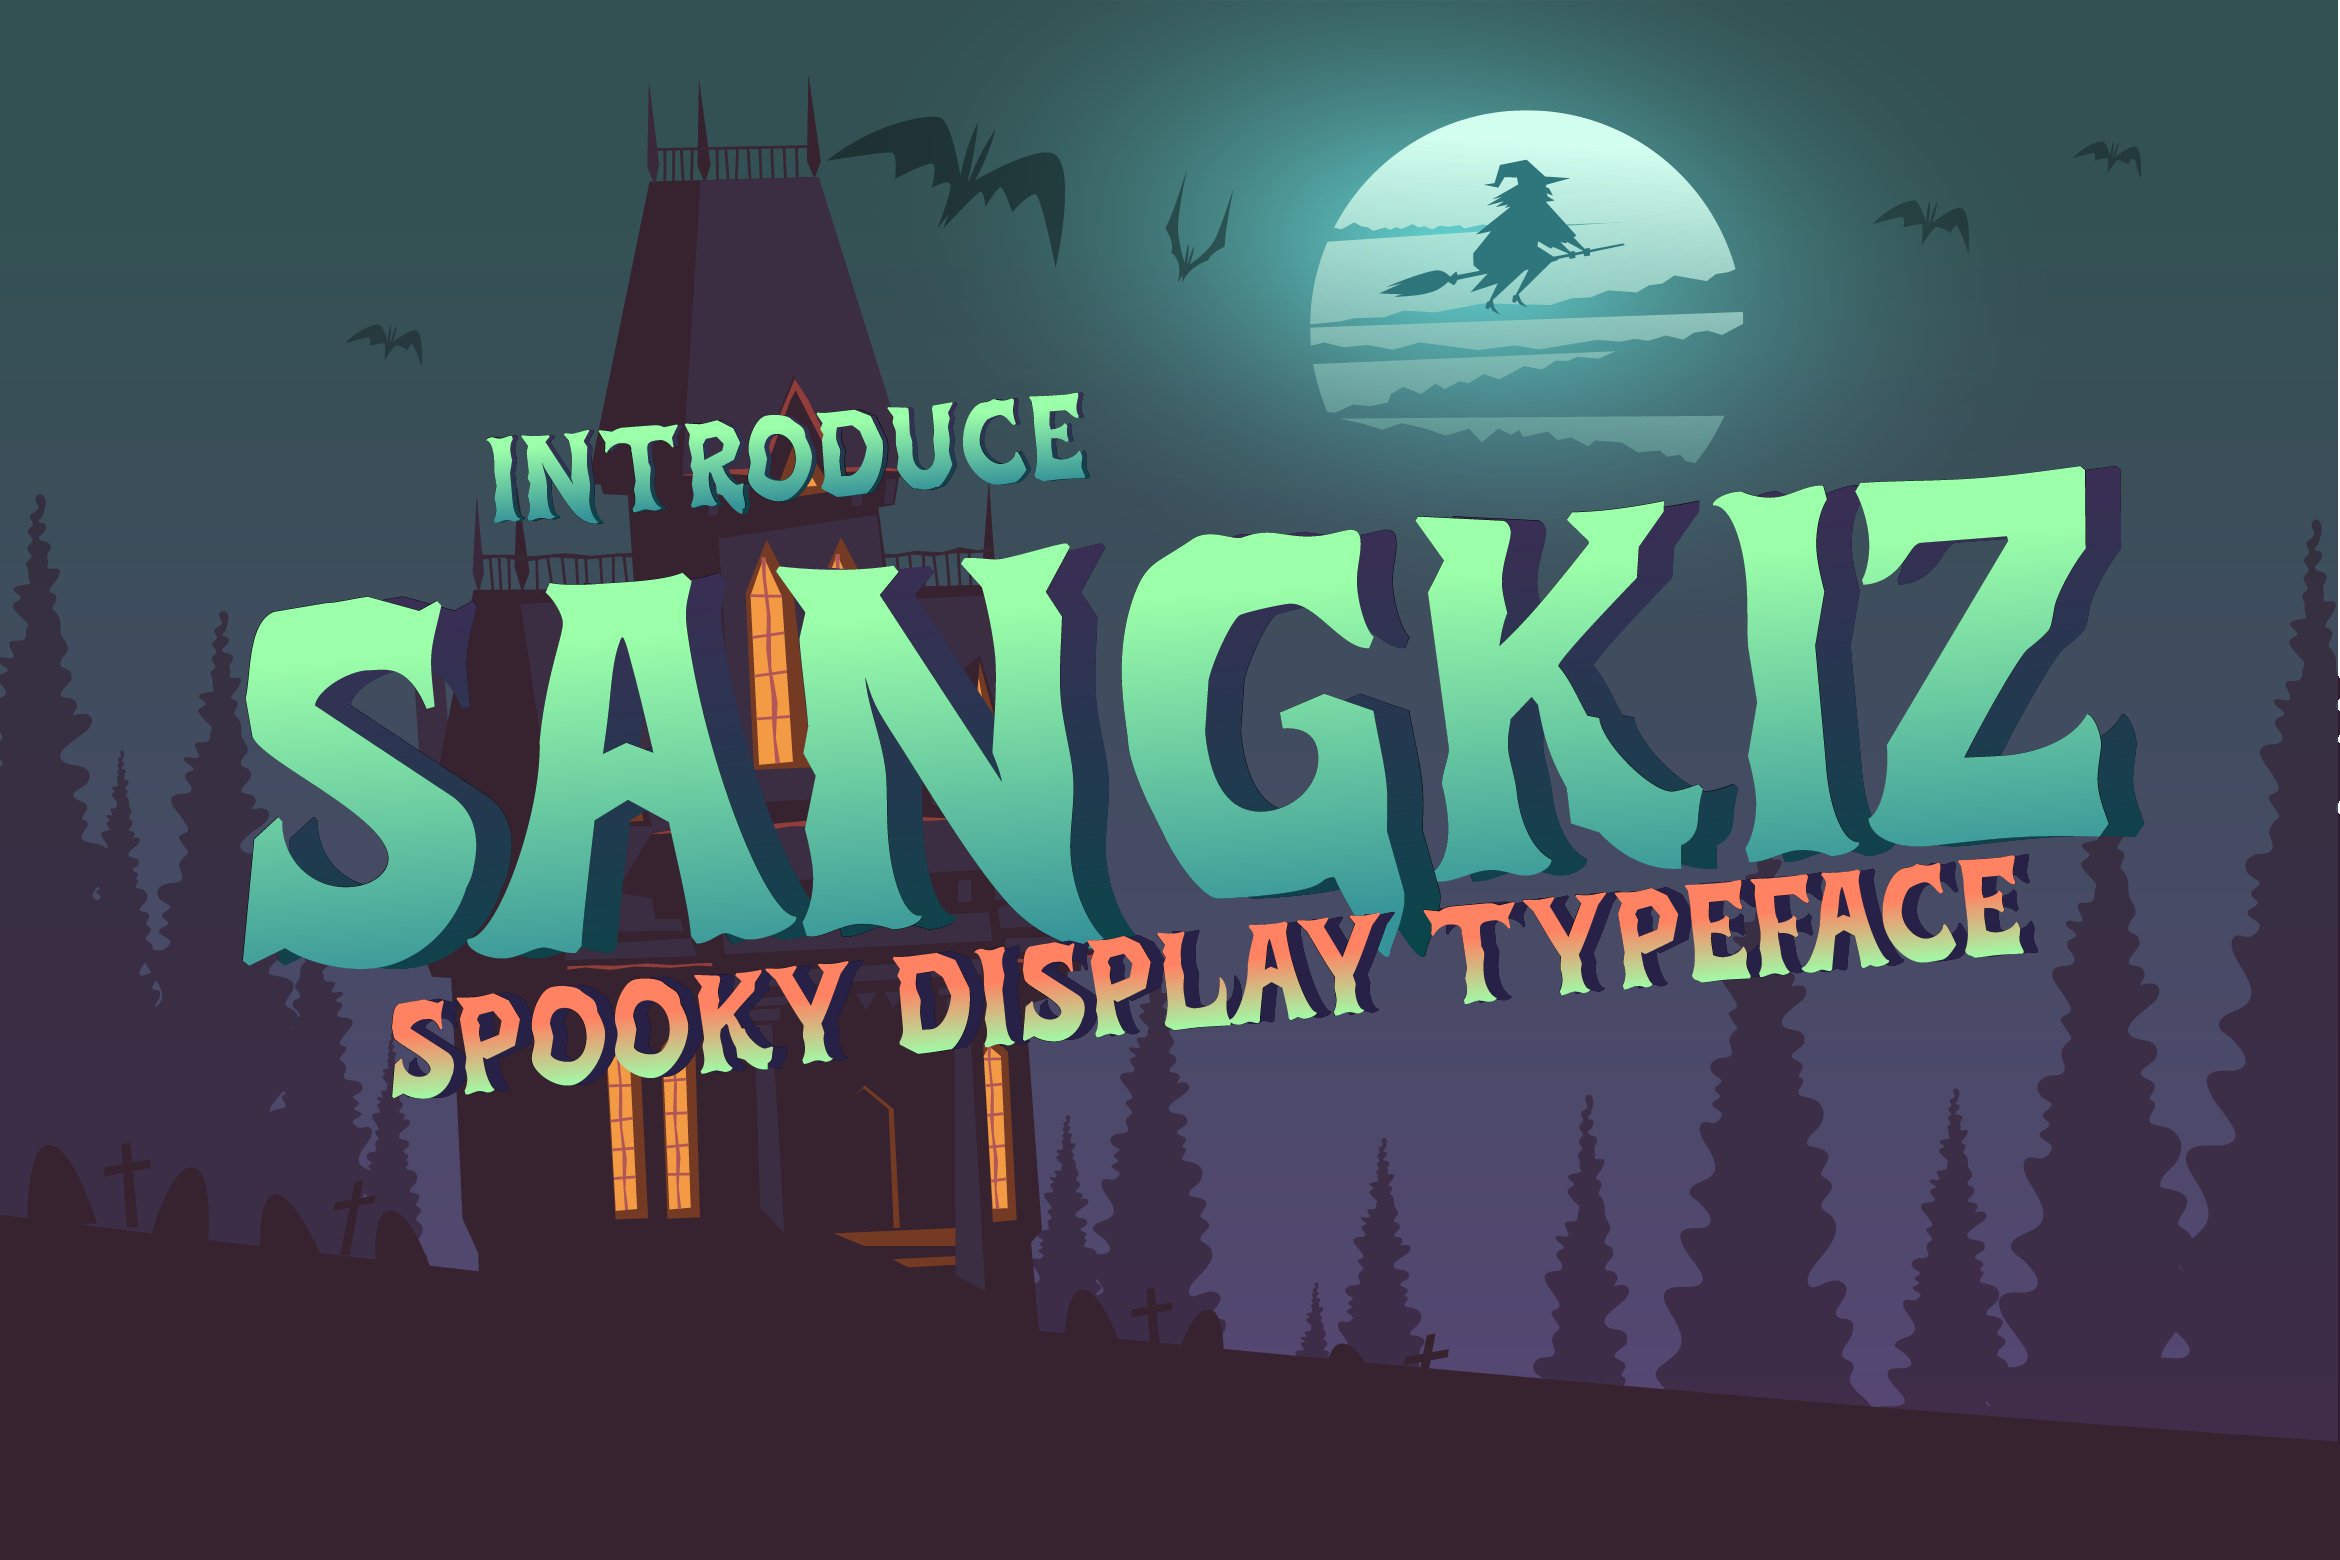 Sangkiz - Spooky Display Typeface cover image.